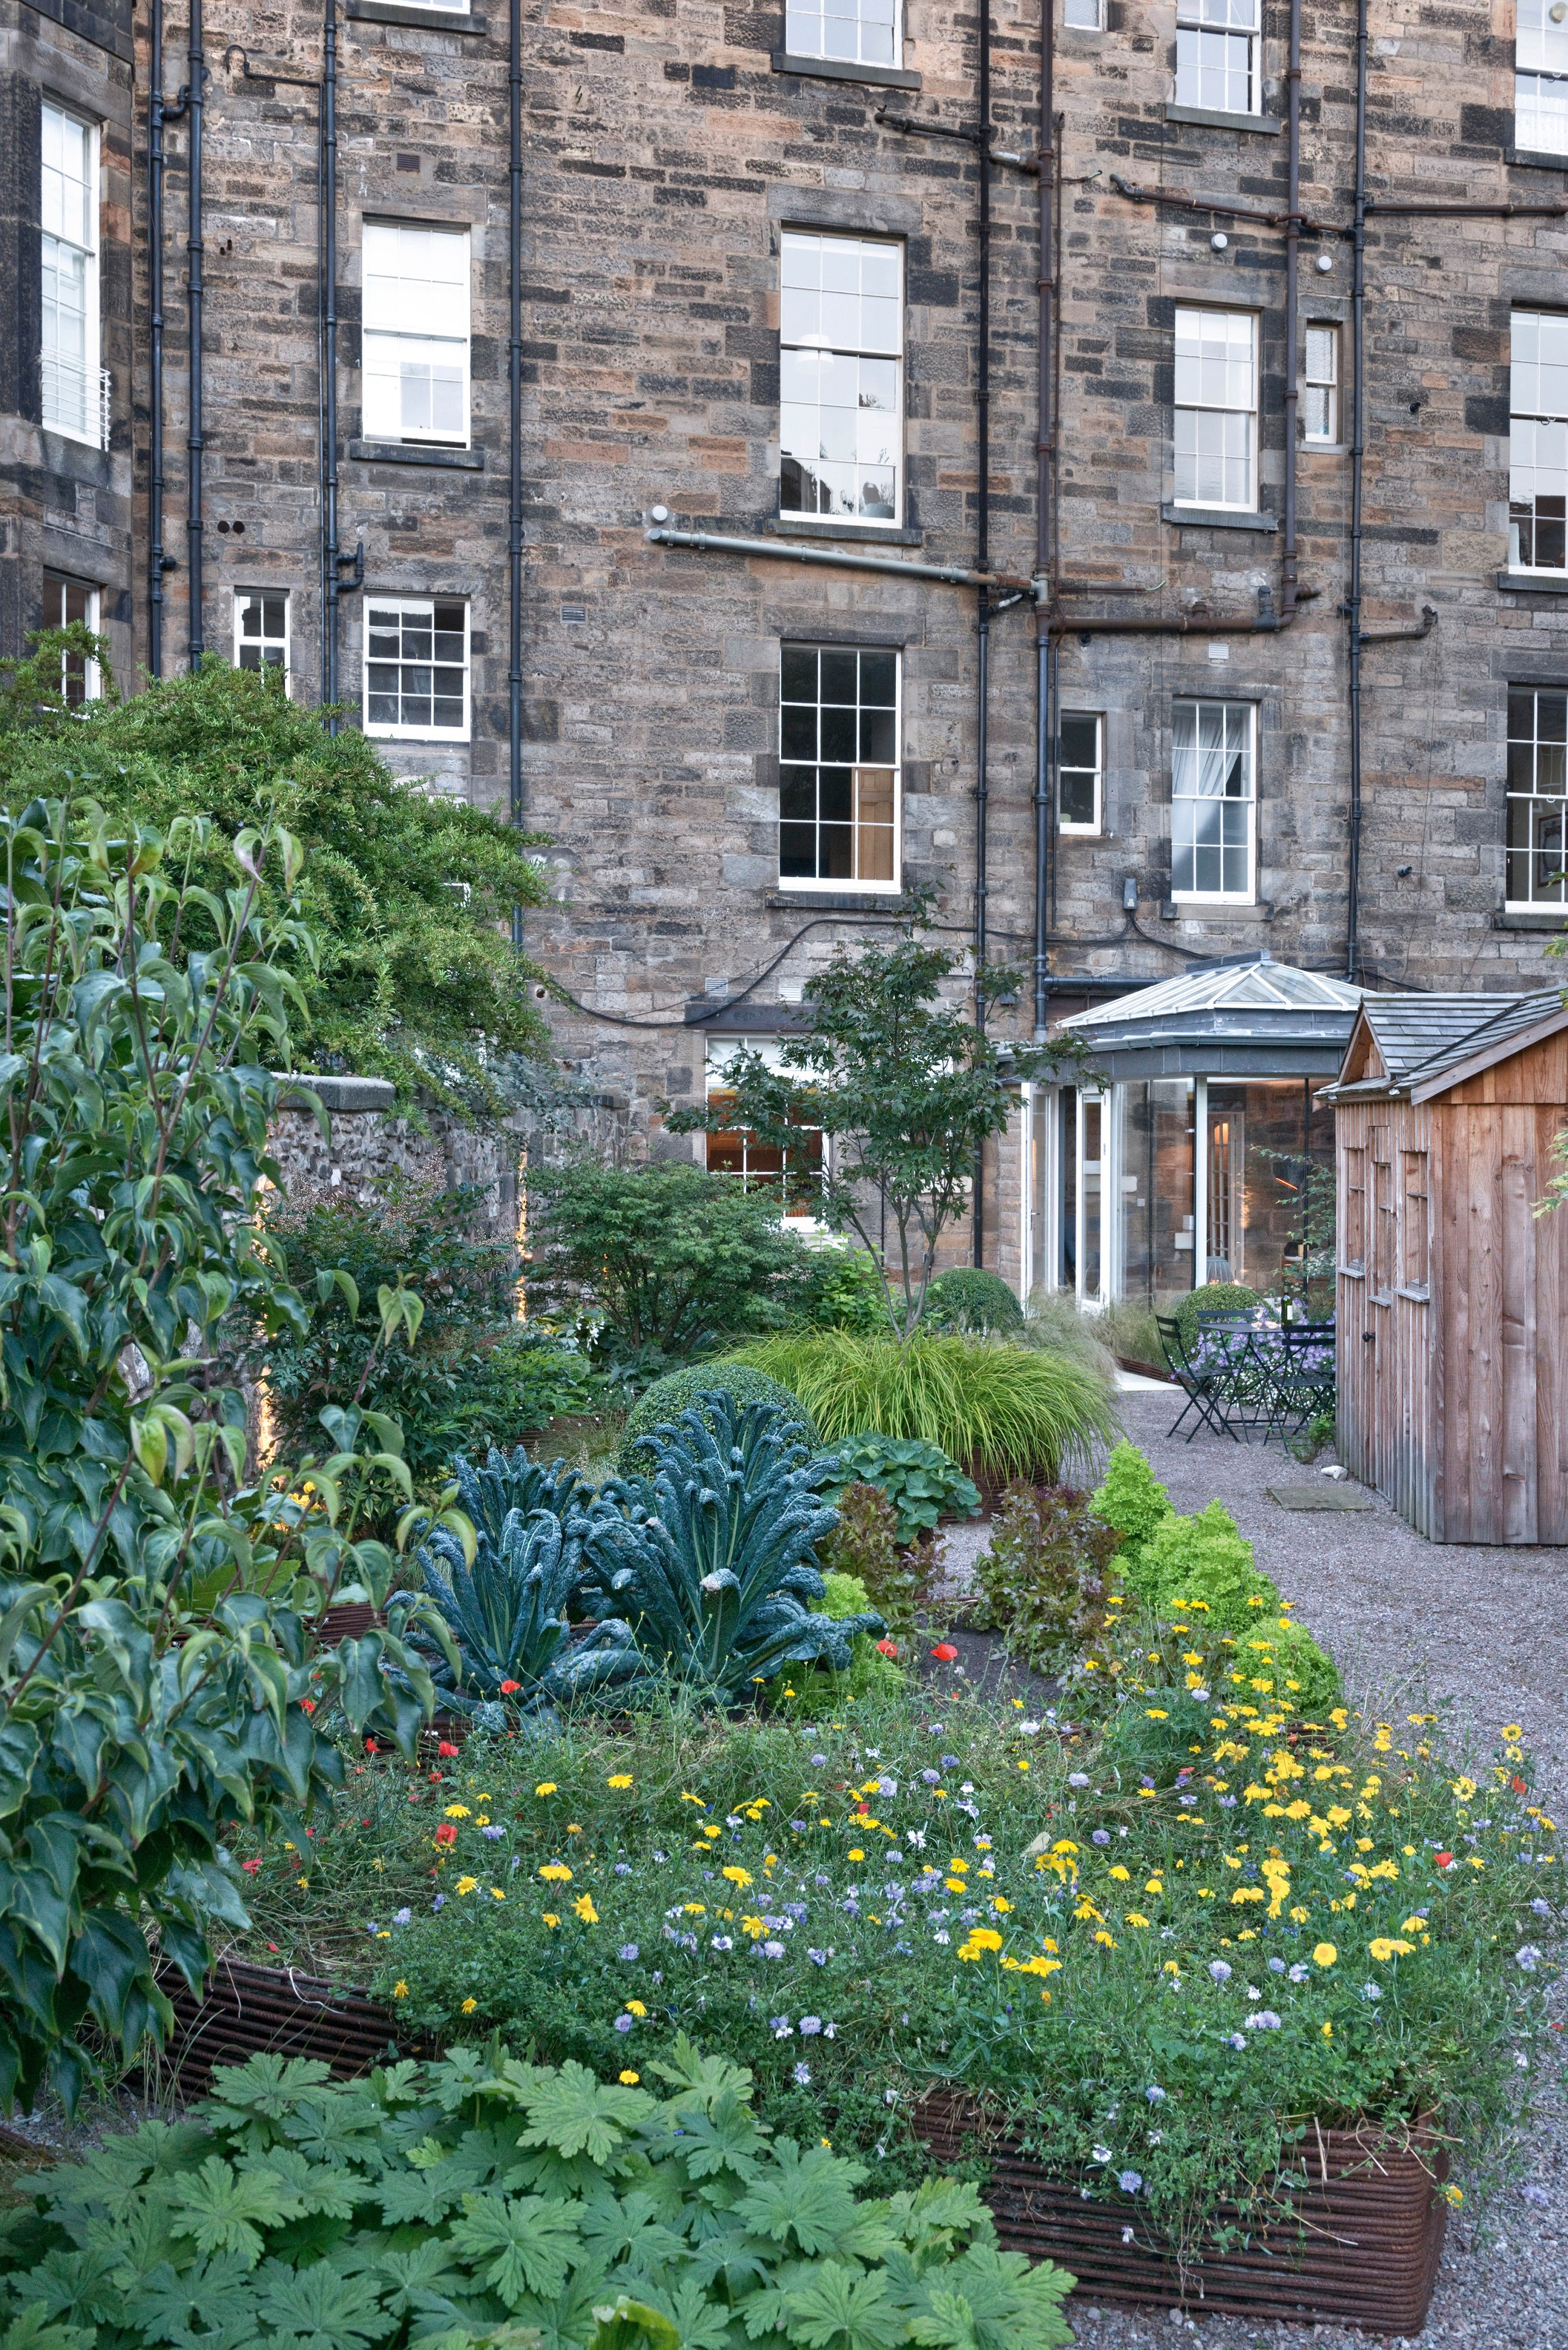 Carolyn Grohmann's small Edinburgh garden